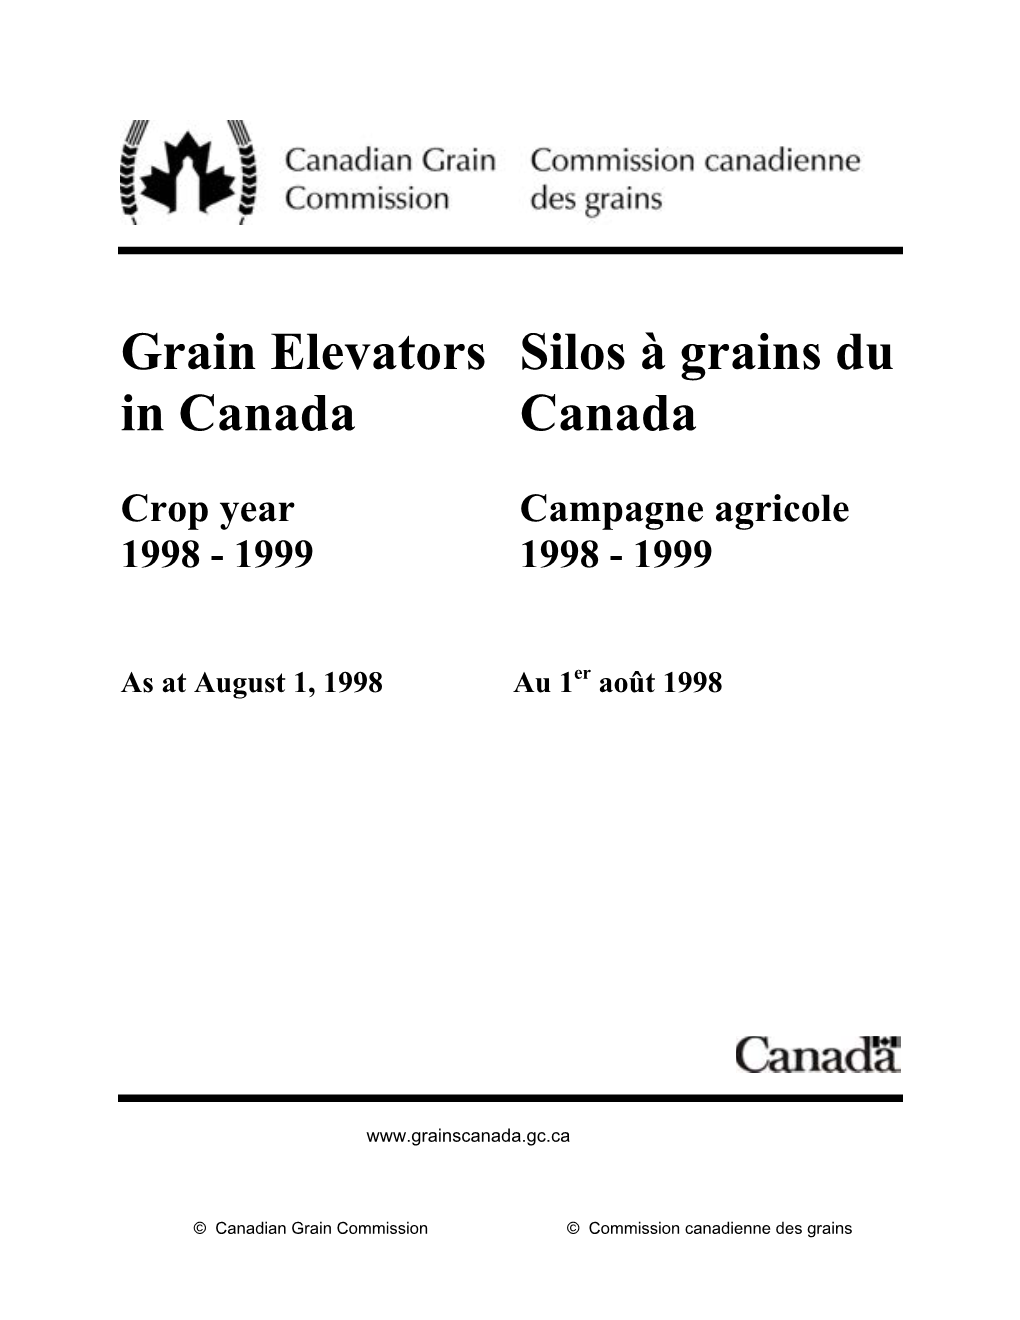 Grain Elevators in Canada, As at August 1, 1998